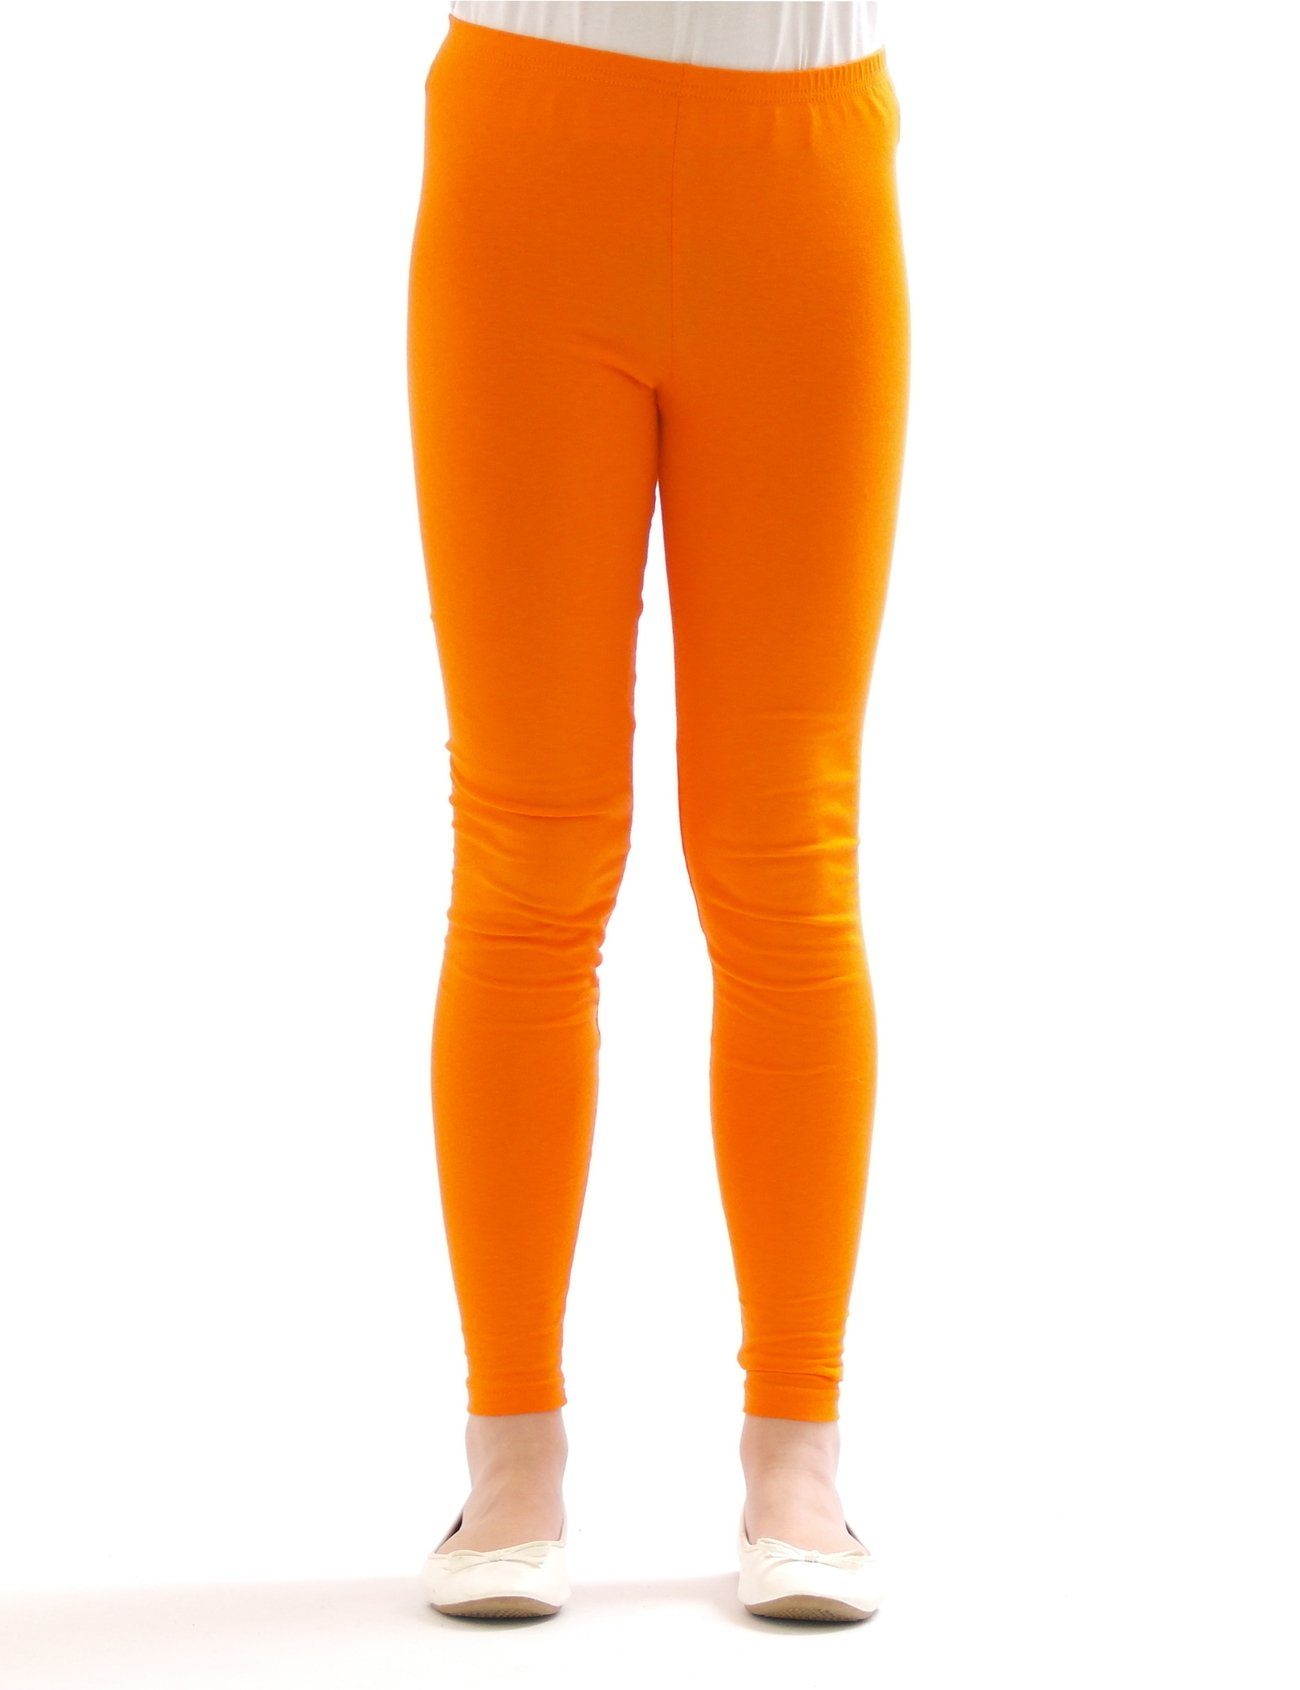 SYS Leggings Kinder Mädchen Leggings Hose lang blickdicht aus Baumwolle Orange